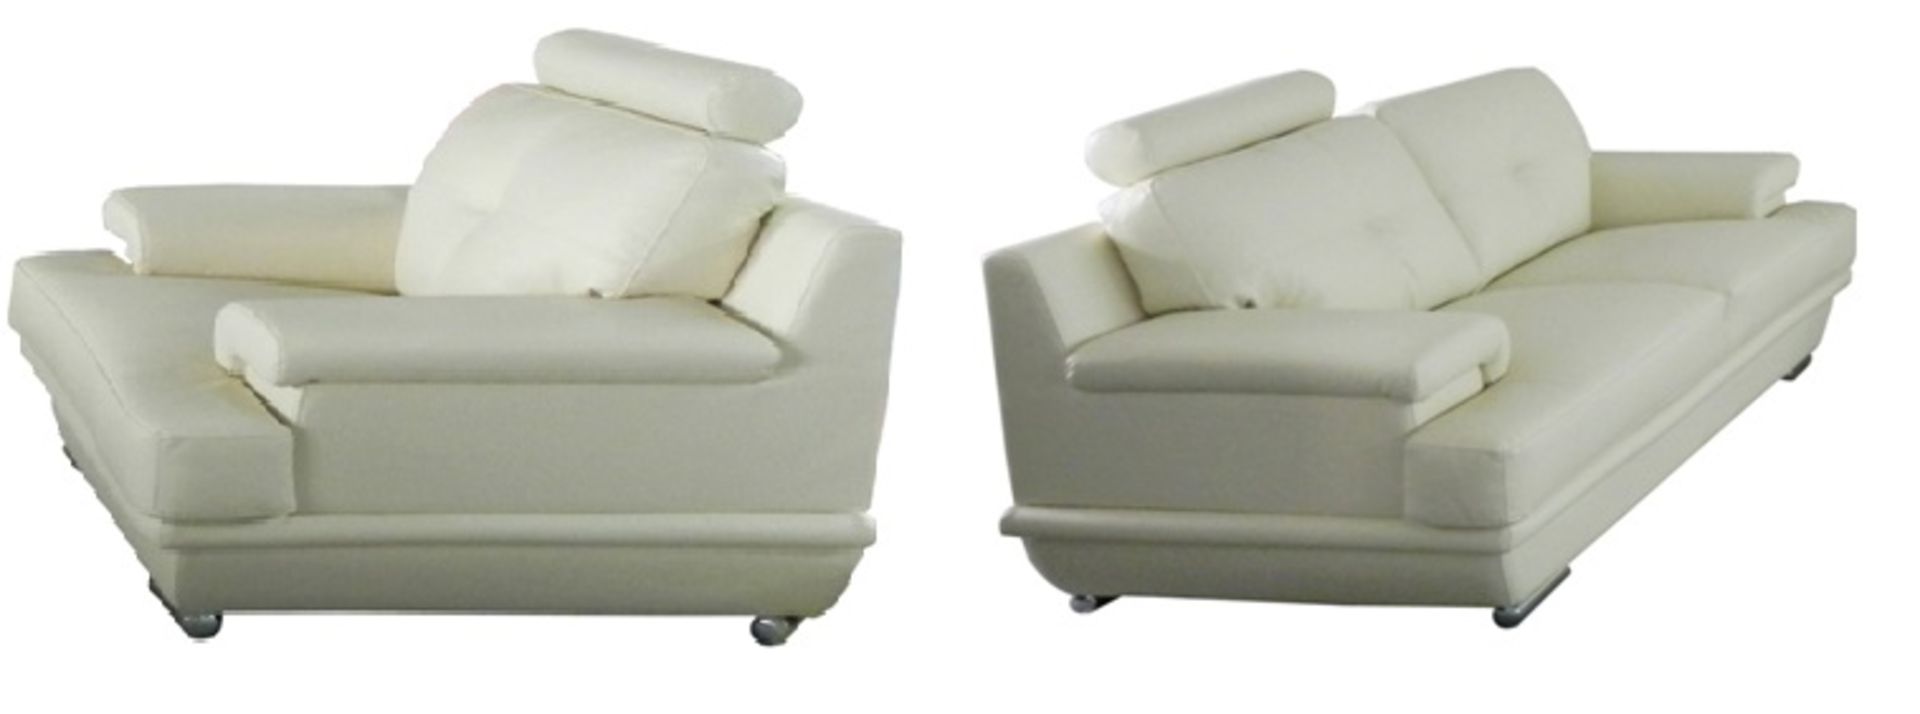 1 x Cream Bonded Leather Sofa 1 Seater - SFS006 (Brand New)